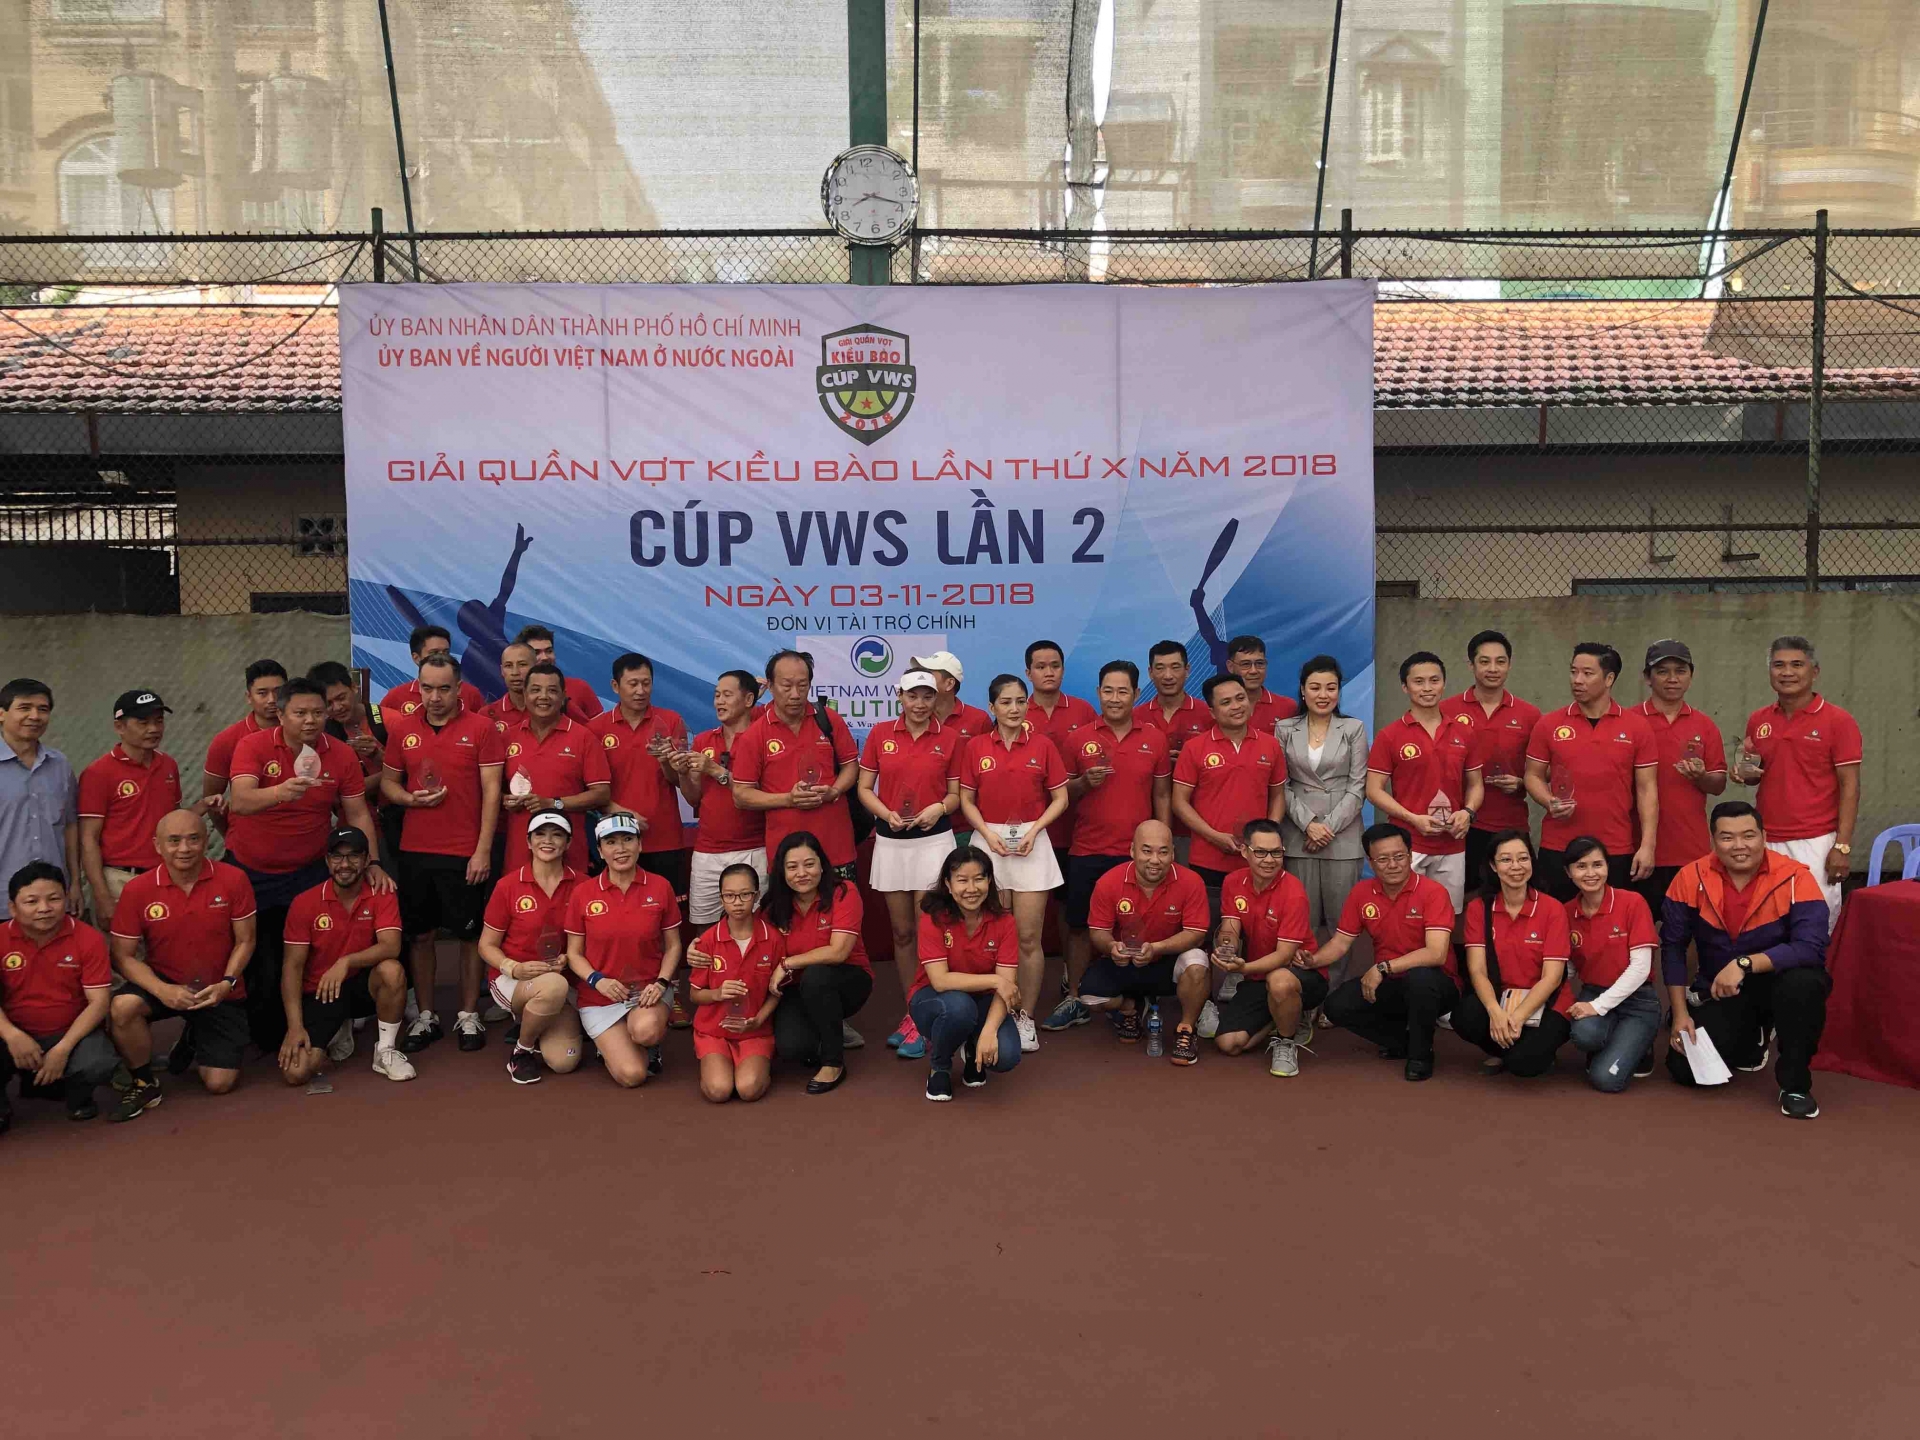 The 10th Overseas Vietnamese Tennis Tournament kicked off on Sunday